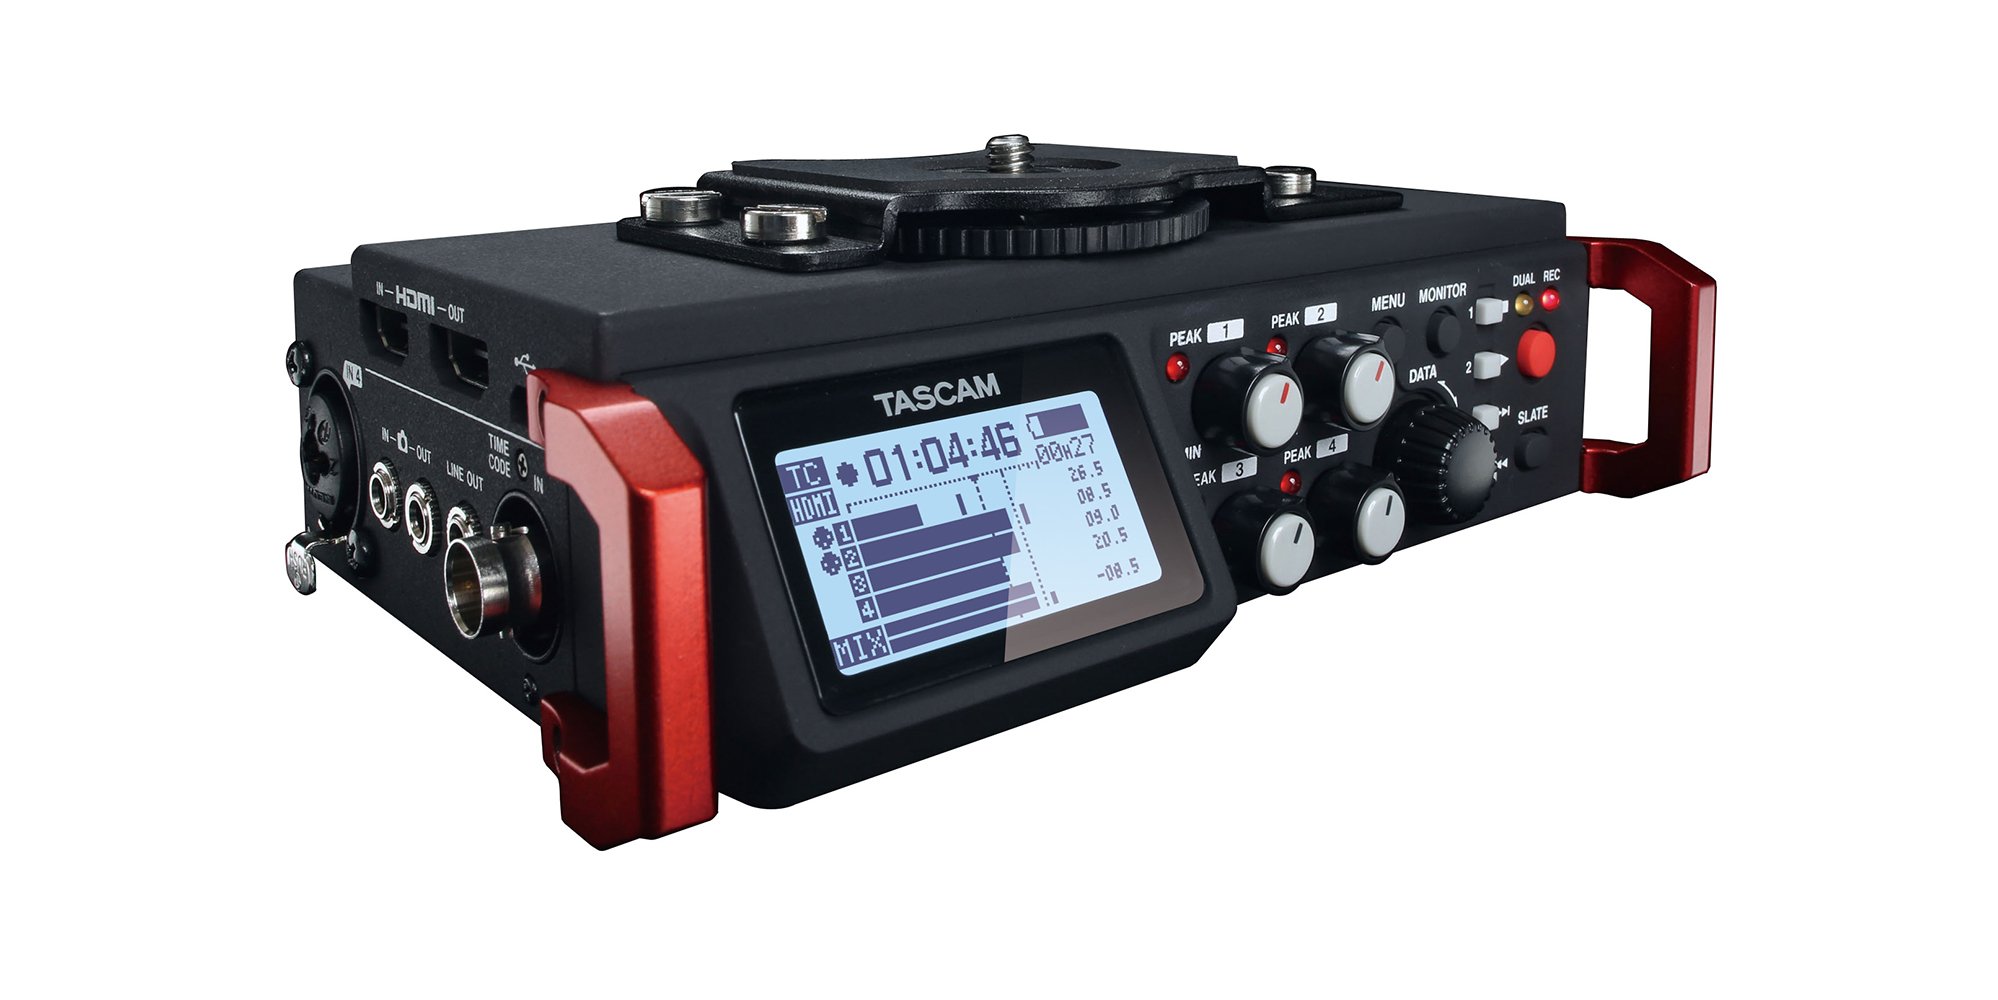 Tascam DR-701D 6-Track Linear PCM Recorder / Mixer For DSLR Camera